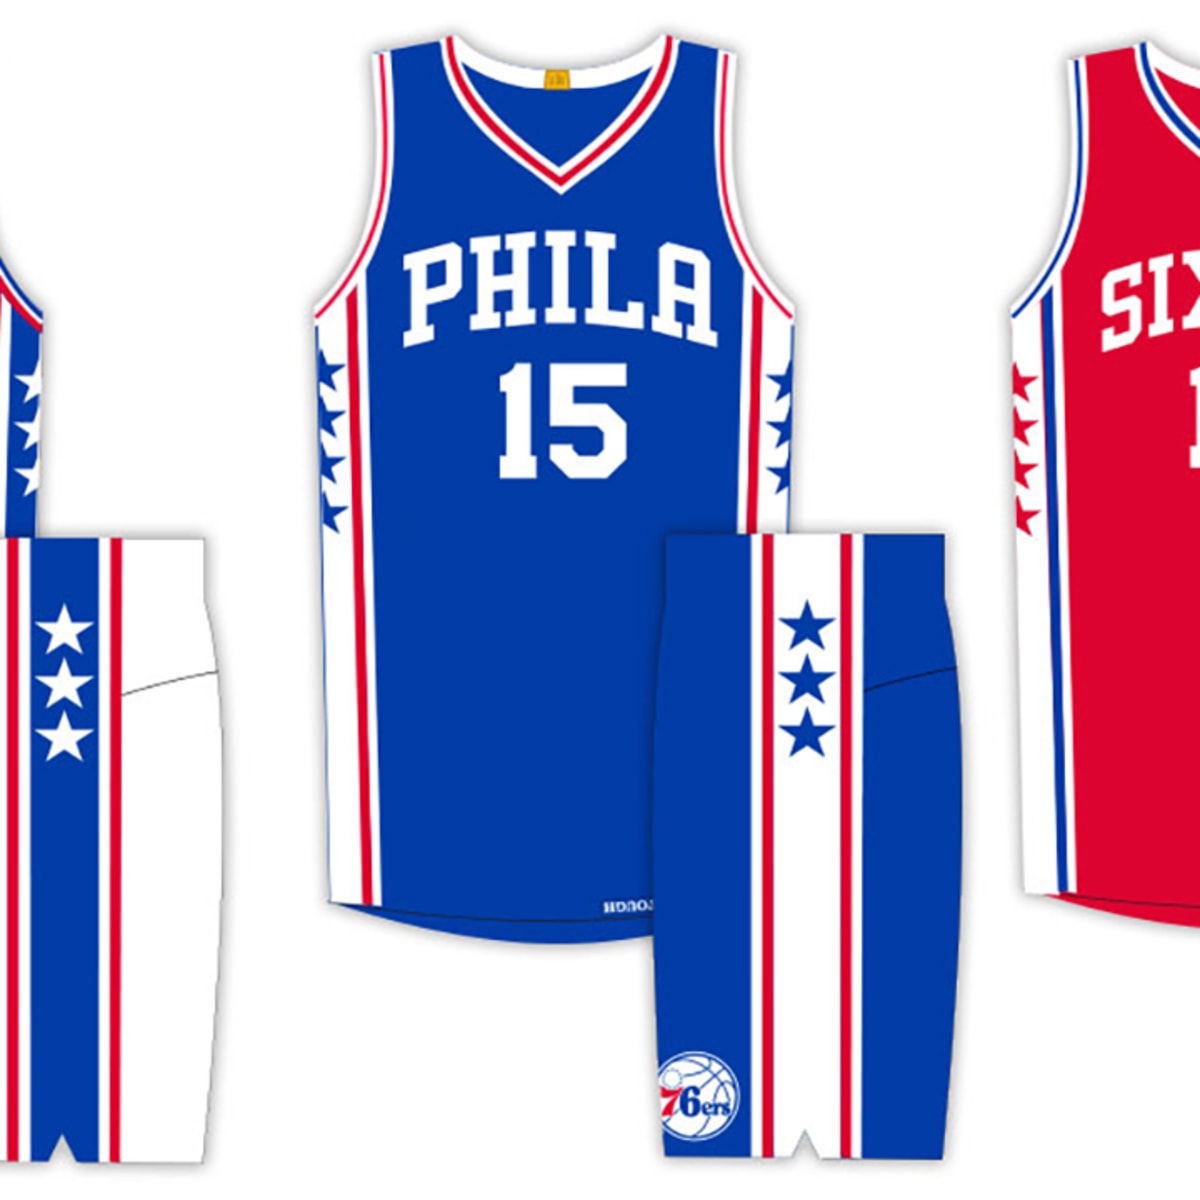 Philadelphia 76ers unveil new uniforms for the 2015-16 season